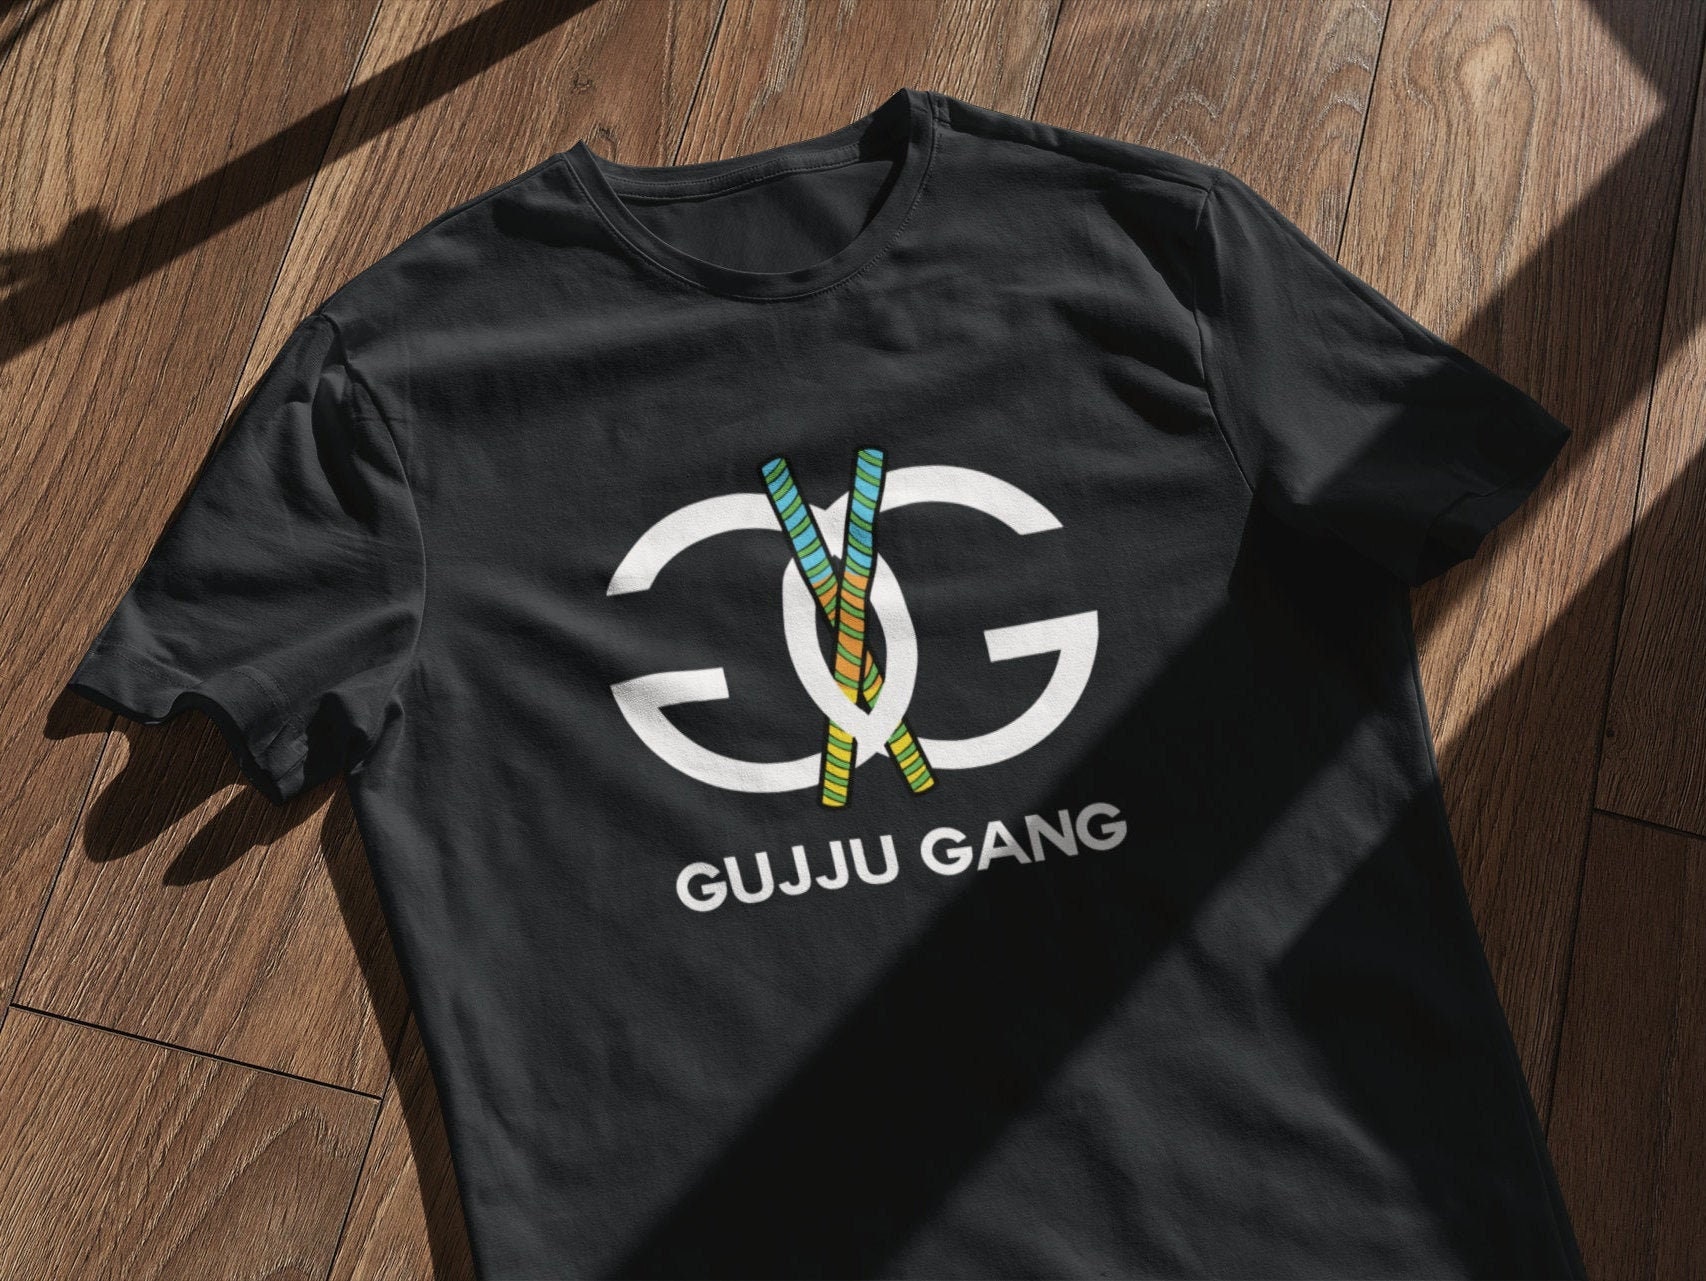 Gujju Gang Tshirt Gujarati T-shirt Indian T-shirt With image